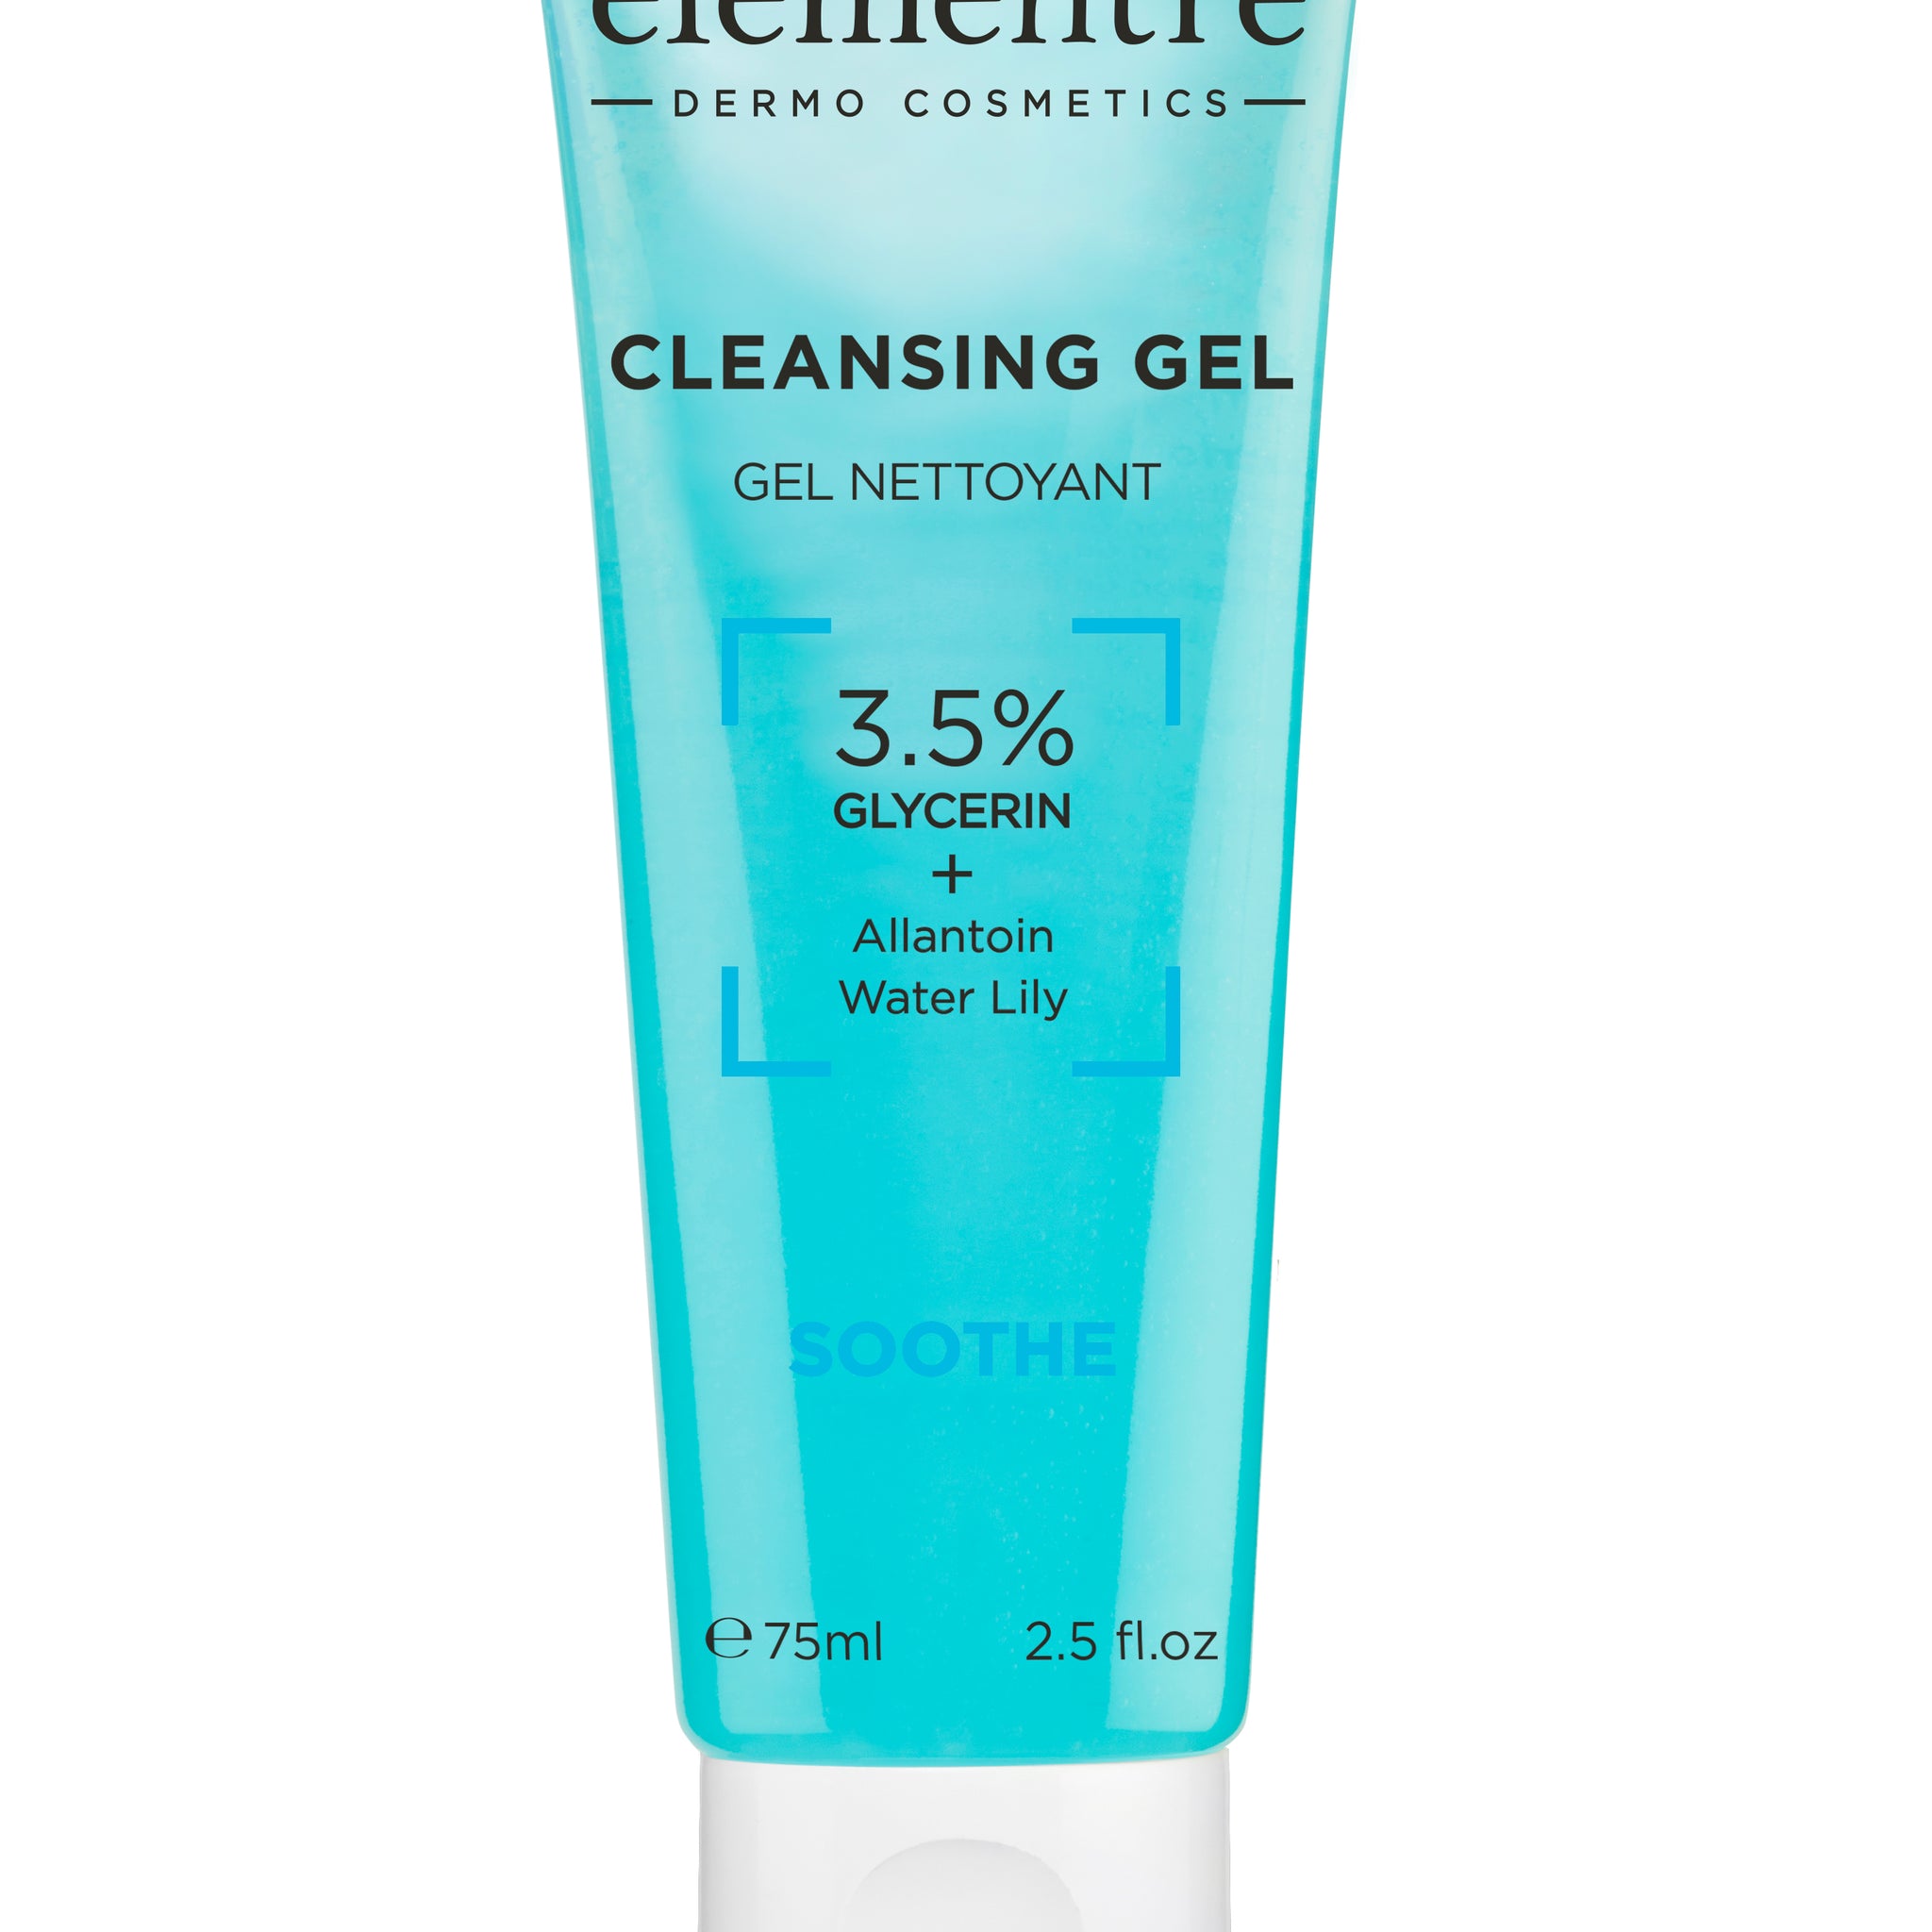 ELEMENTRE 3.5% GLYCERIN - CLEANSING GEL 75ML